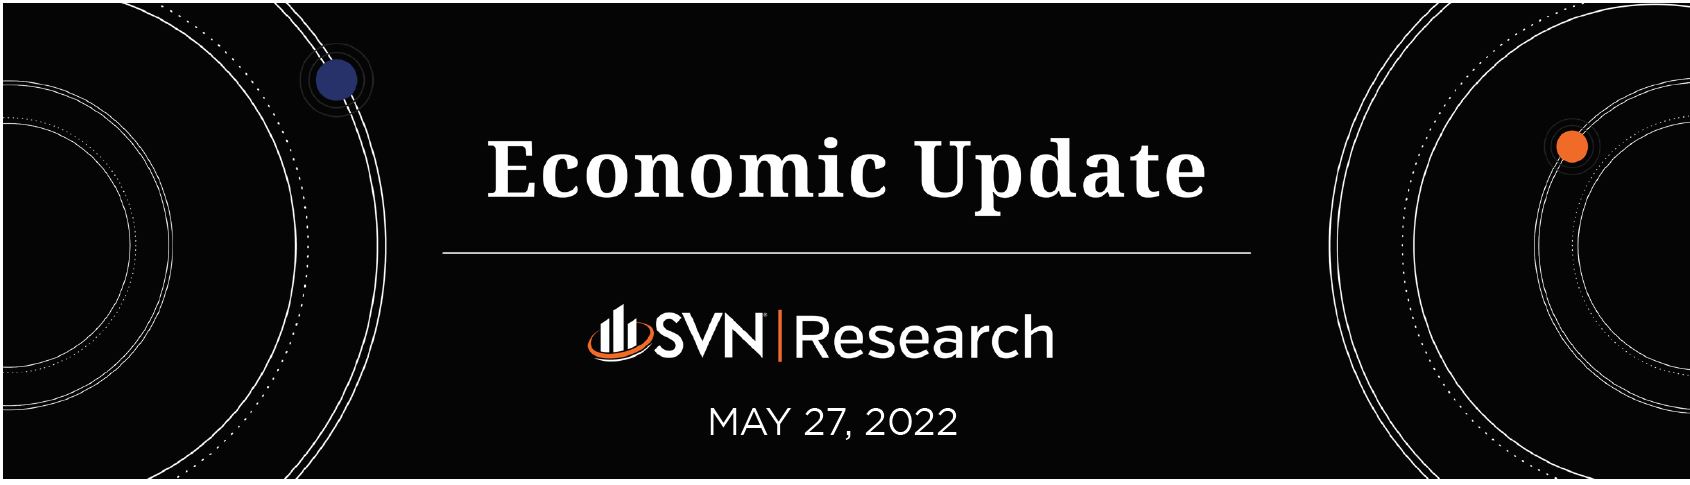 SVN | Research Economic Update 5.27.2022